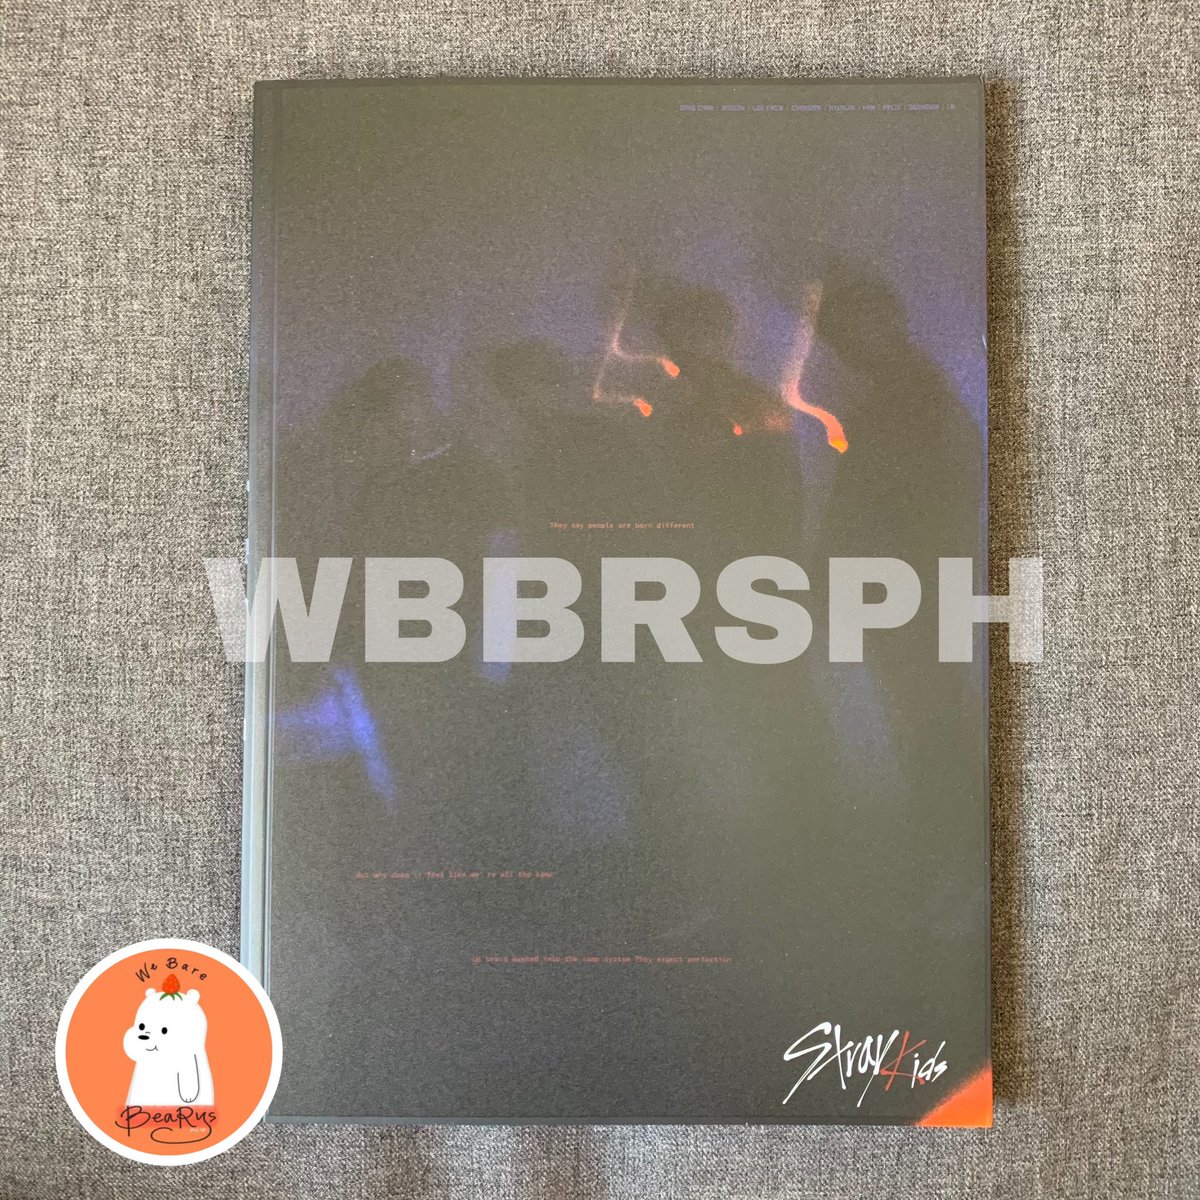  #WBBRSPH_Onhand SKZ I AM NOT (ORANGE VER)₱290- Unsealed- Album only- Minho first page- 1 stock